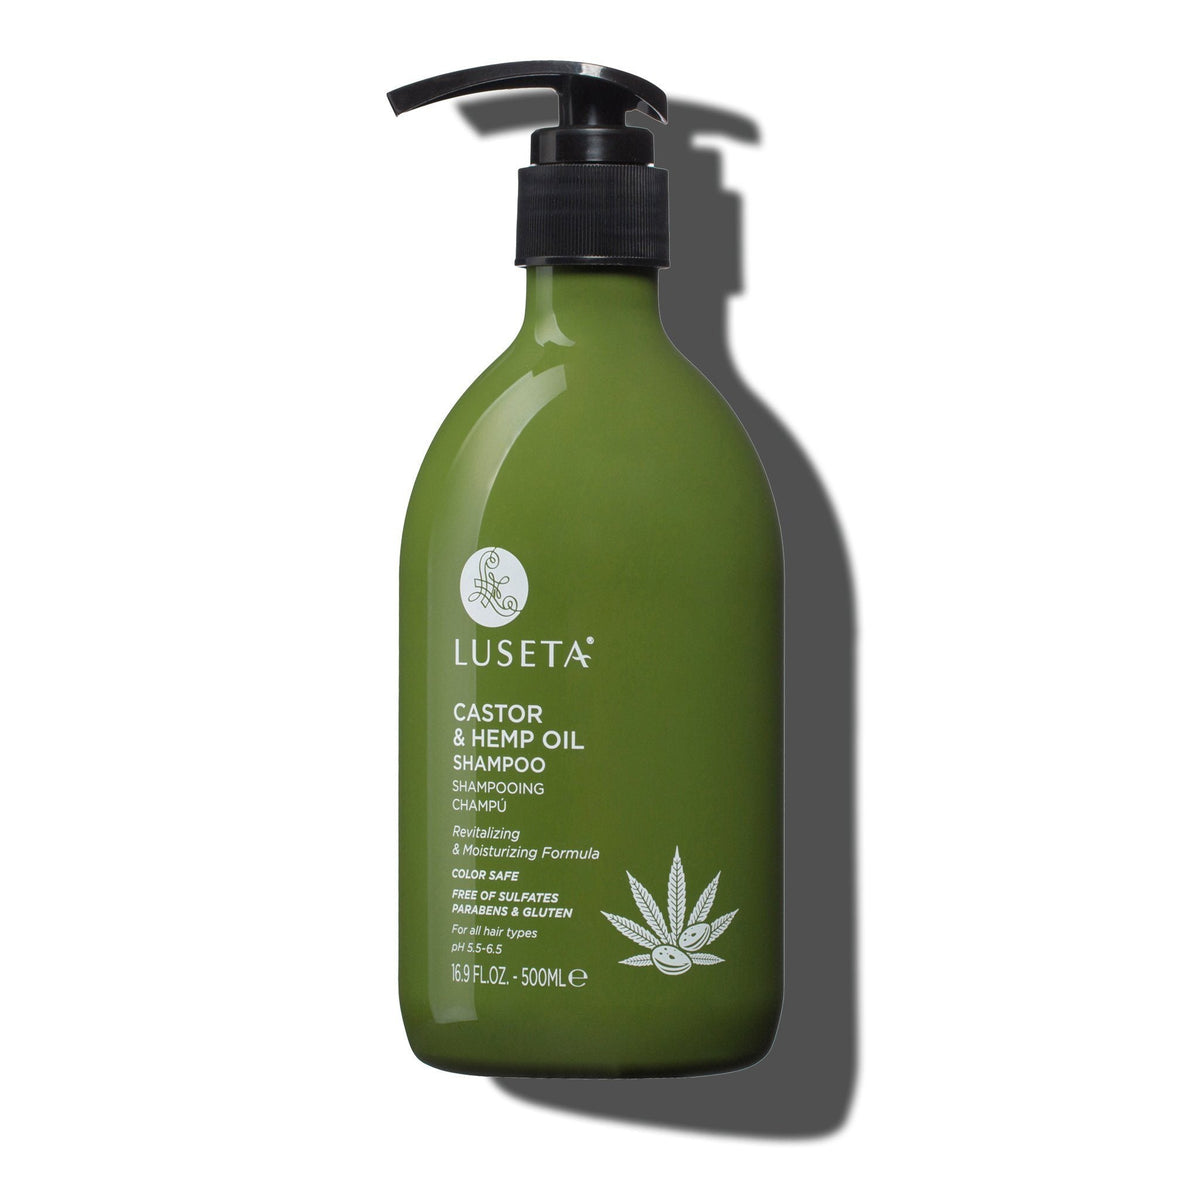 Castor & Hemp Oil Shampoo - 16.9oz - by Luseta Beauty |ProCare Outlet|